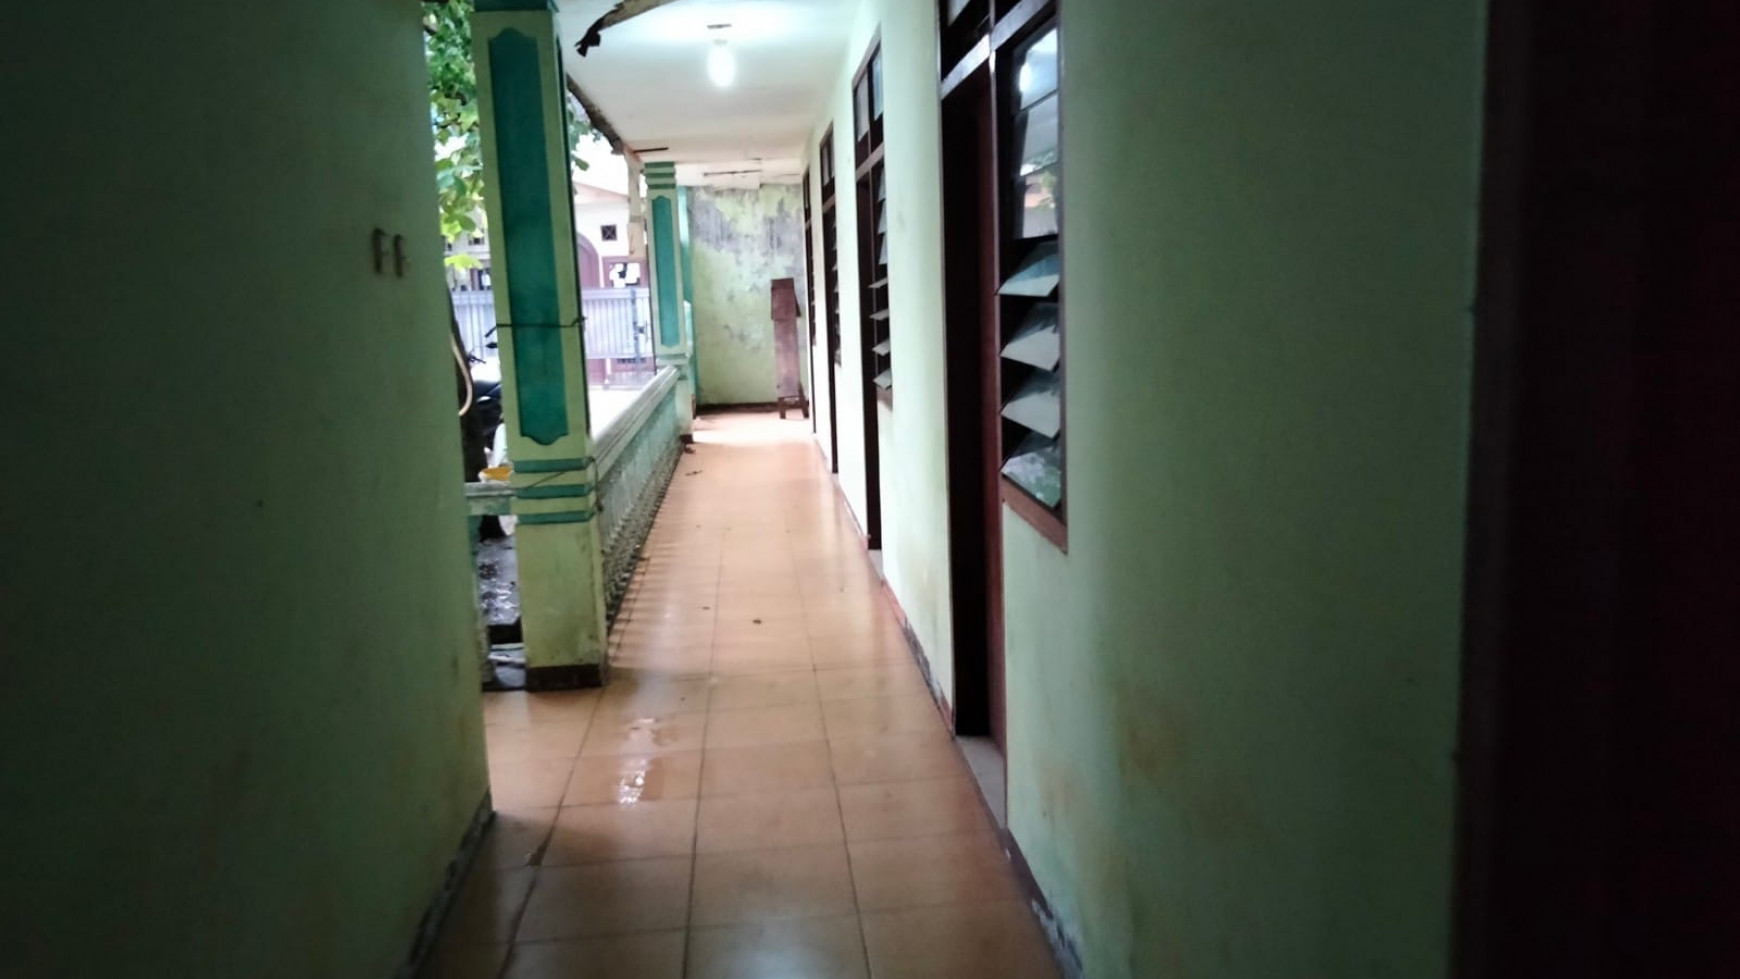 Rumah Kos2an di Belakang Rumah Sakit Universitas Indonesia Depok